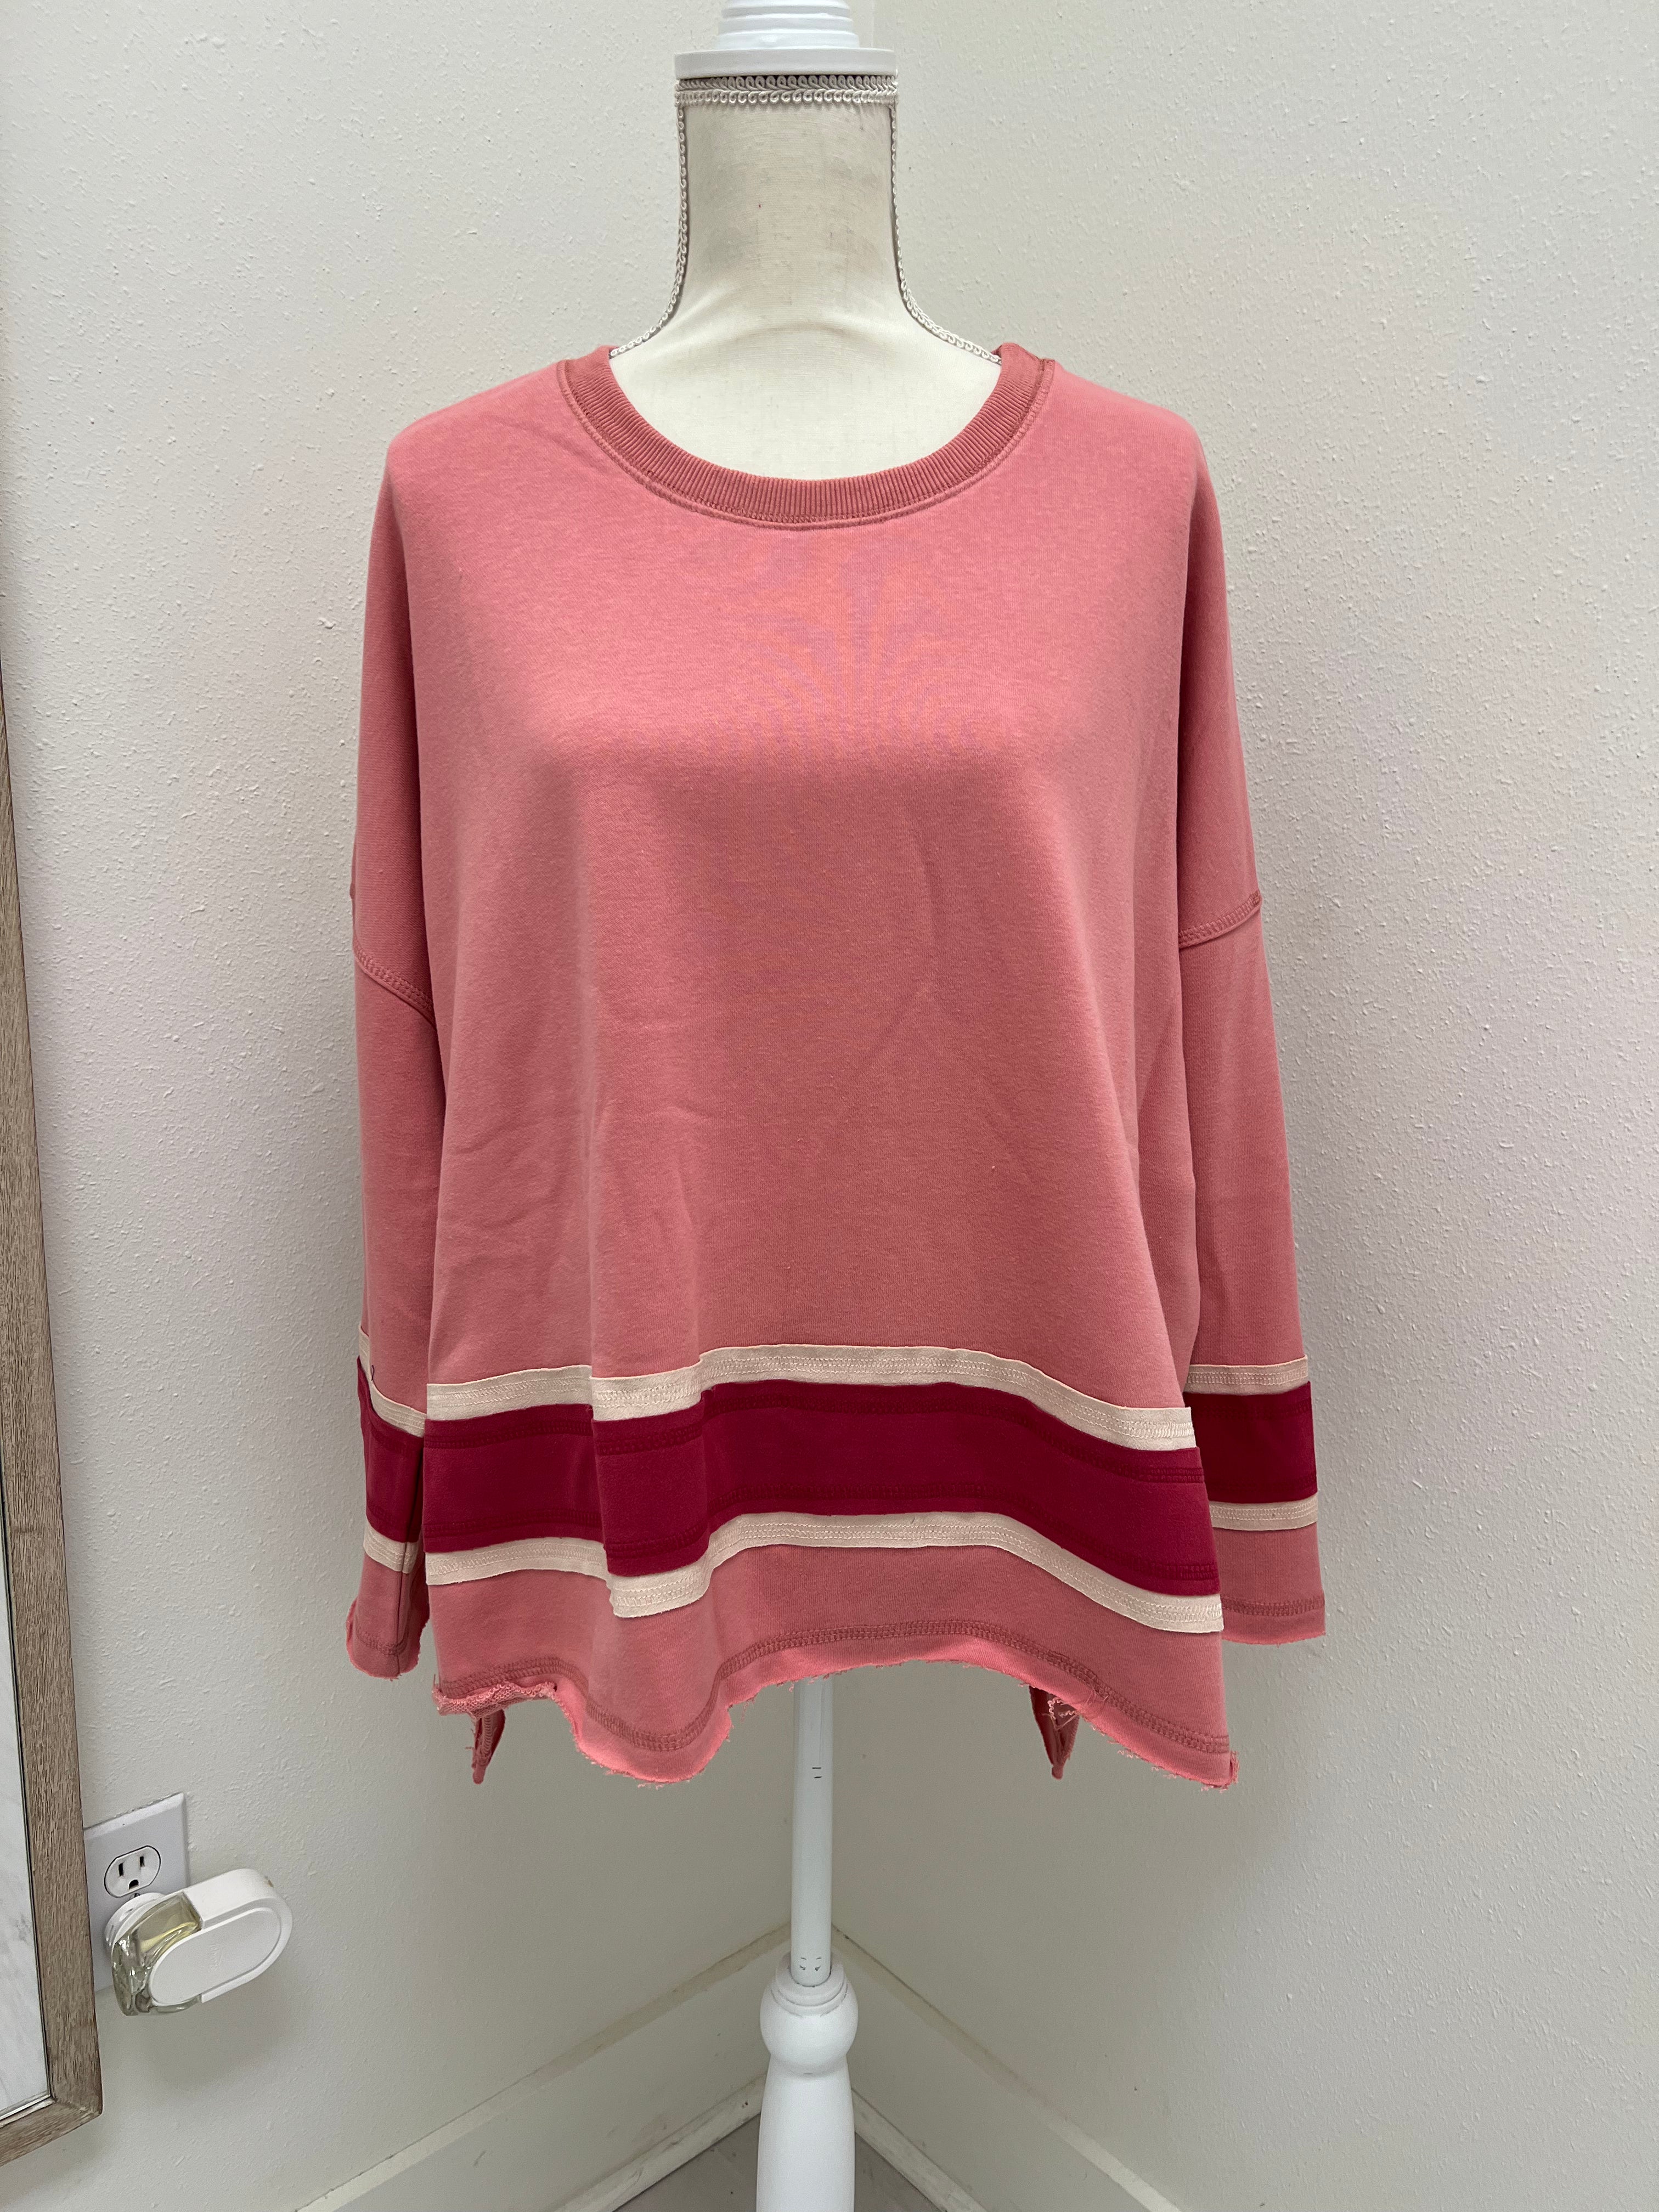 Pink sweatshirt with suede detail